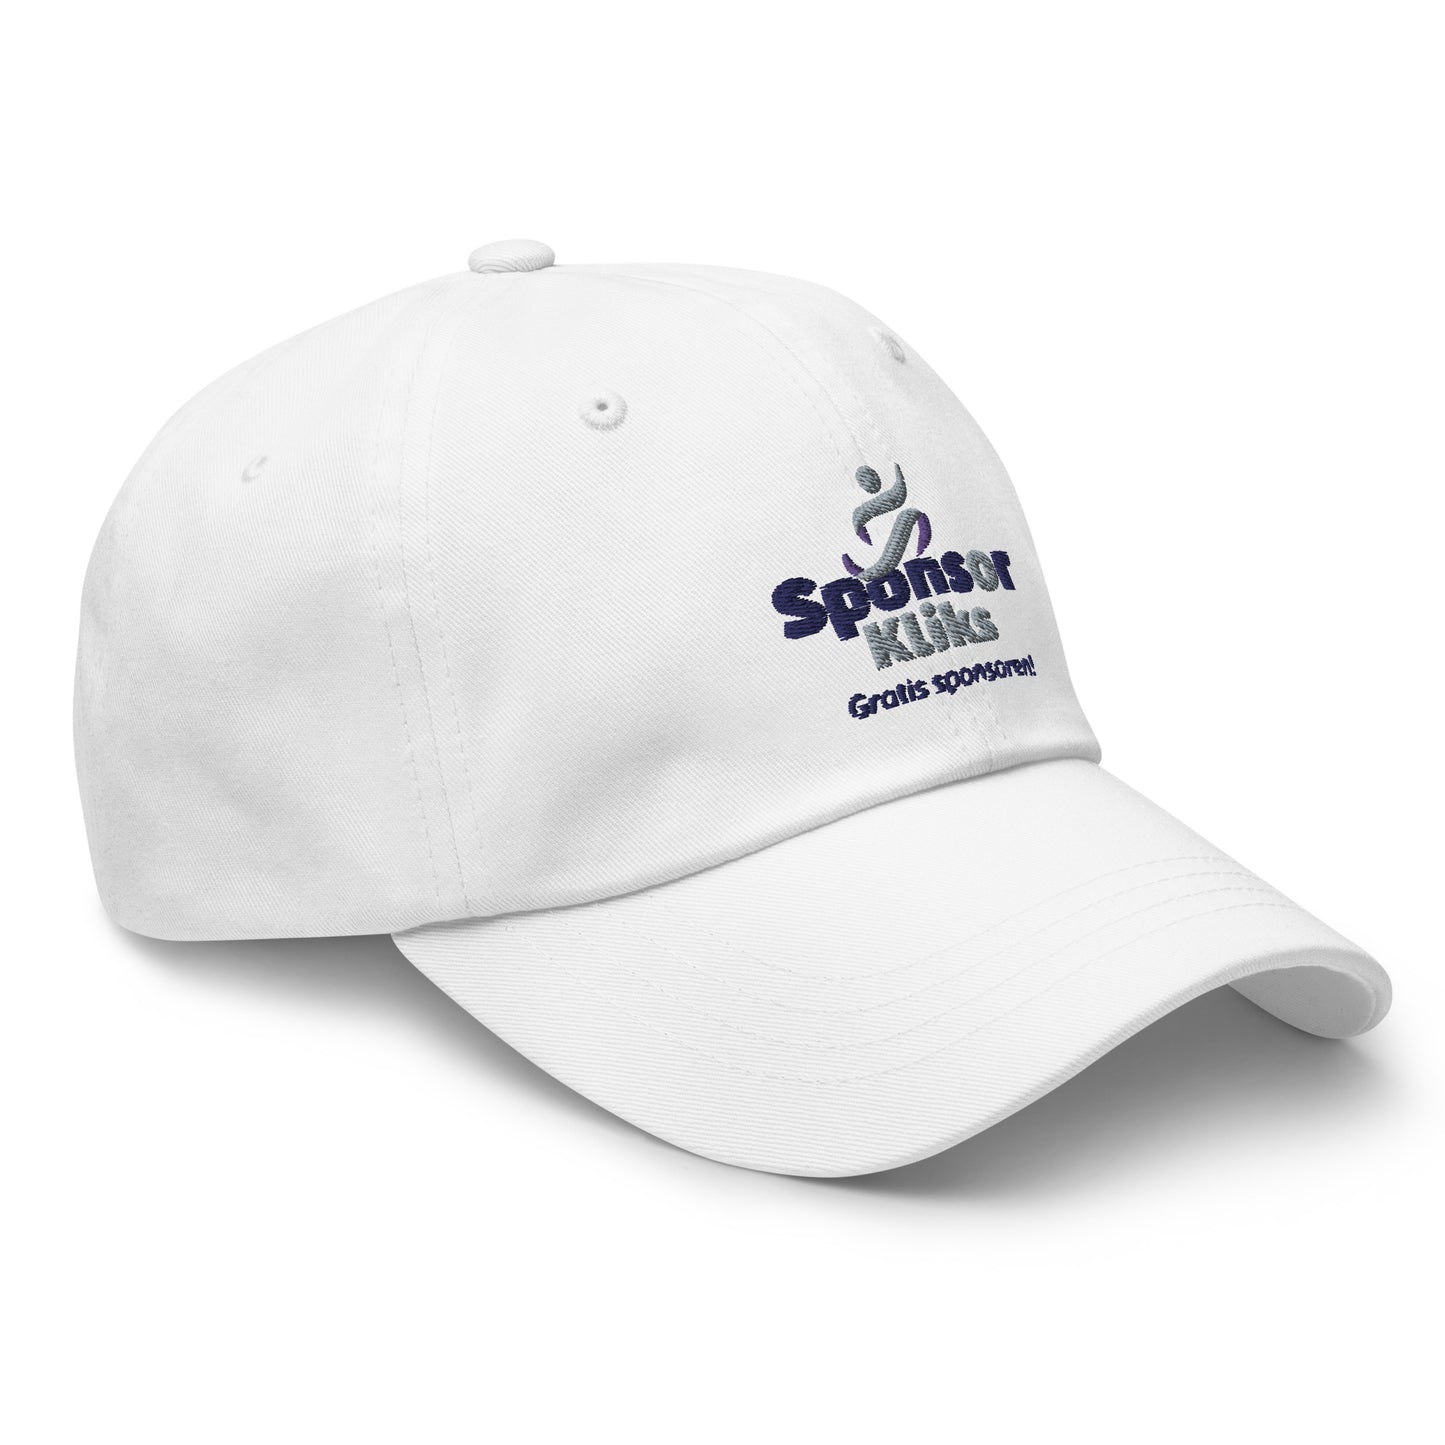 SponsorKliks baseball cap